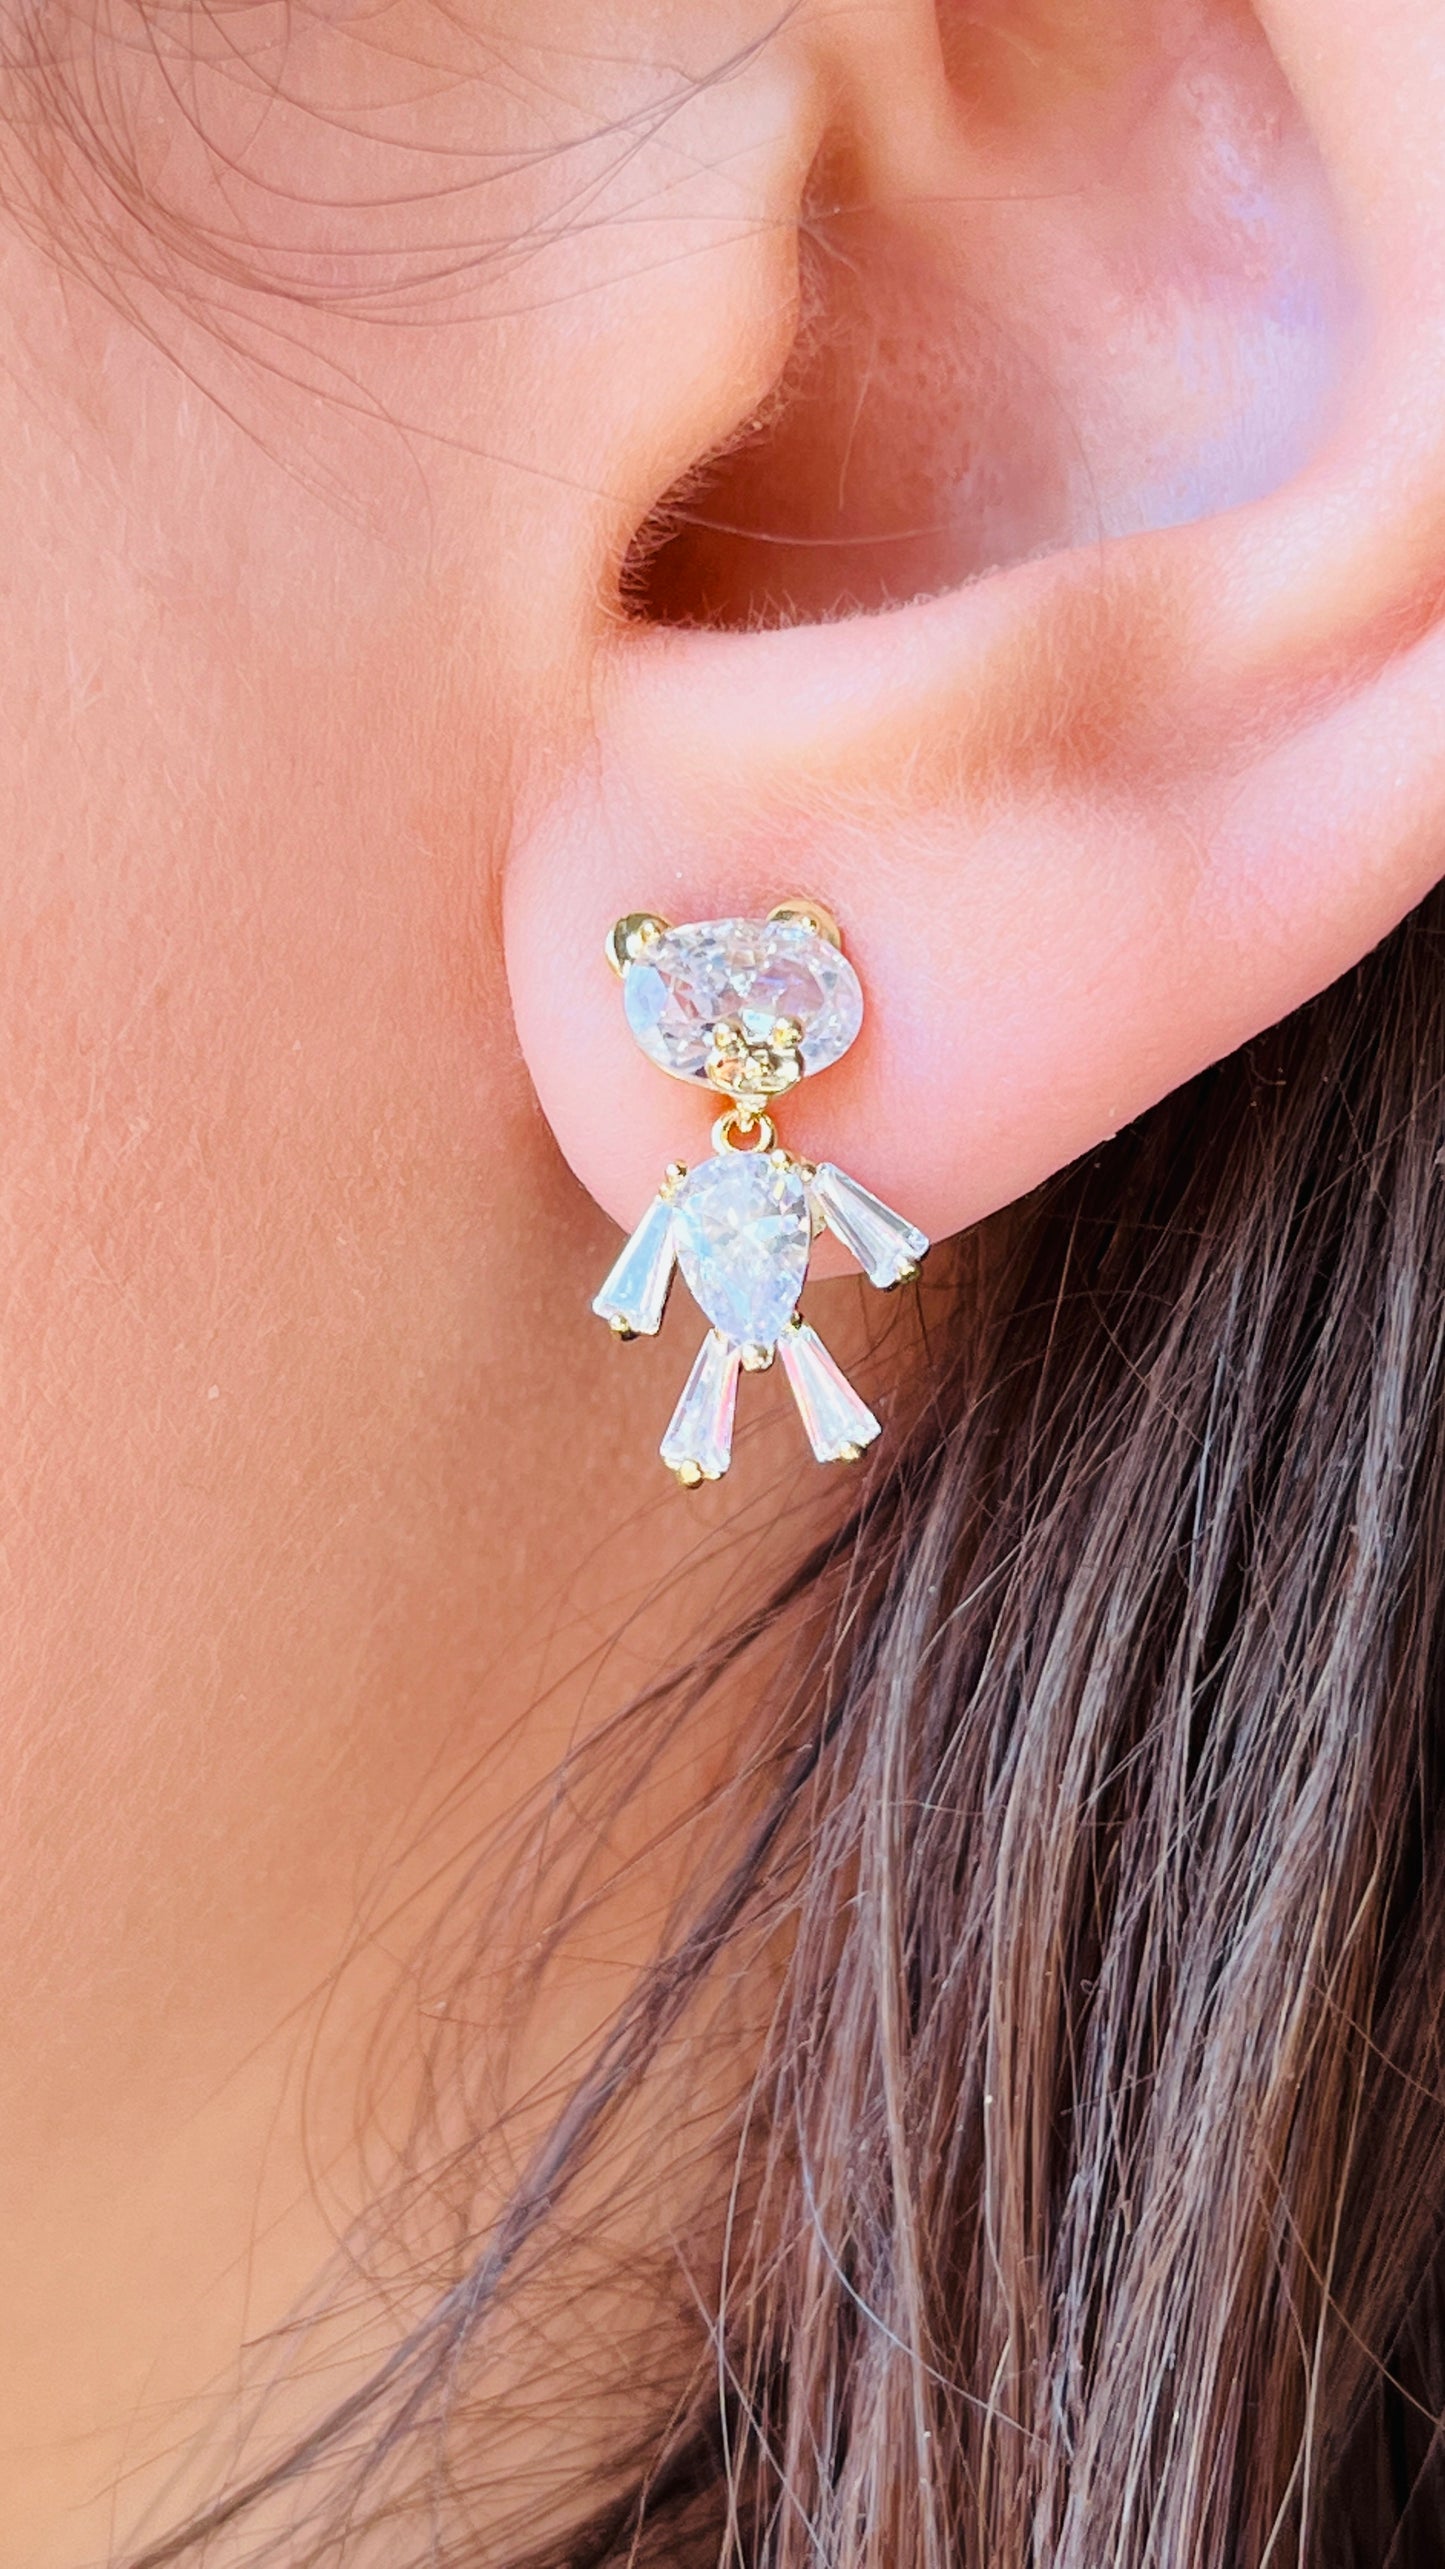 Shiny doll earring